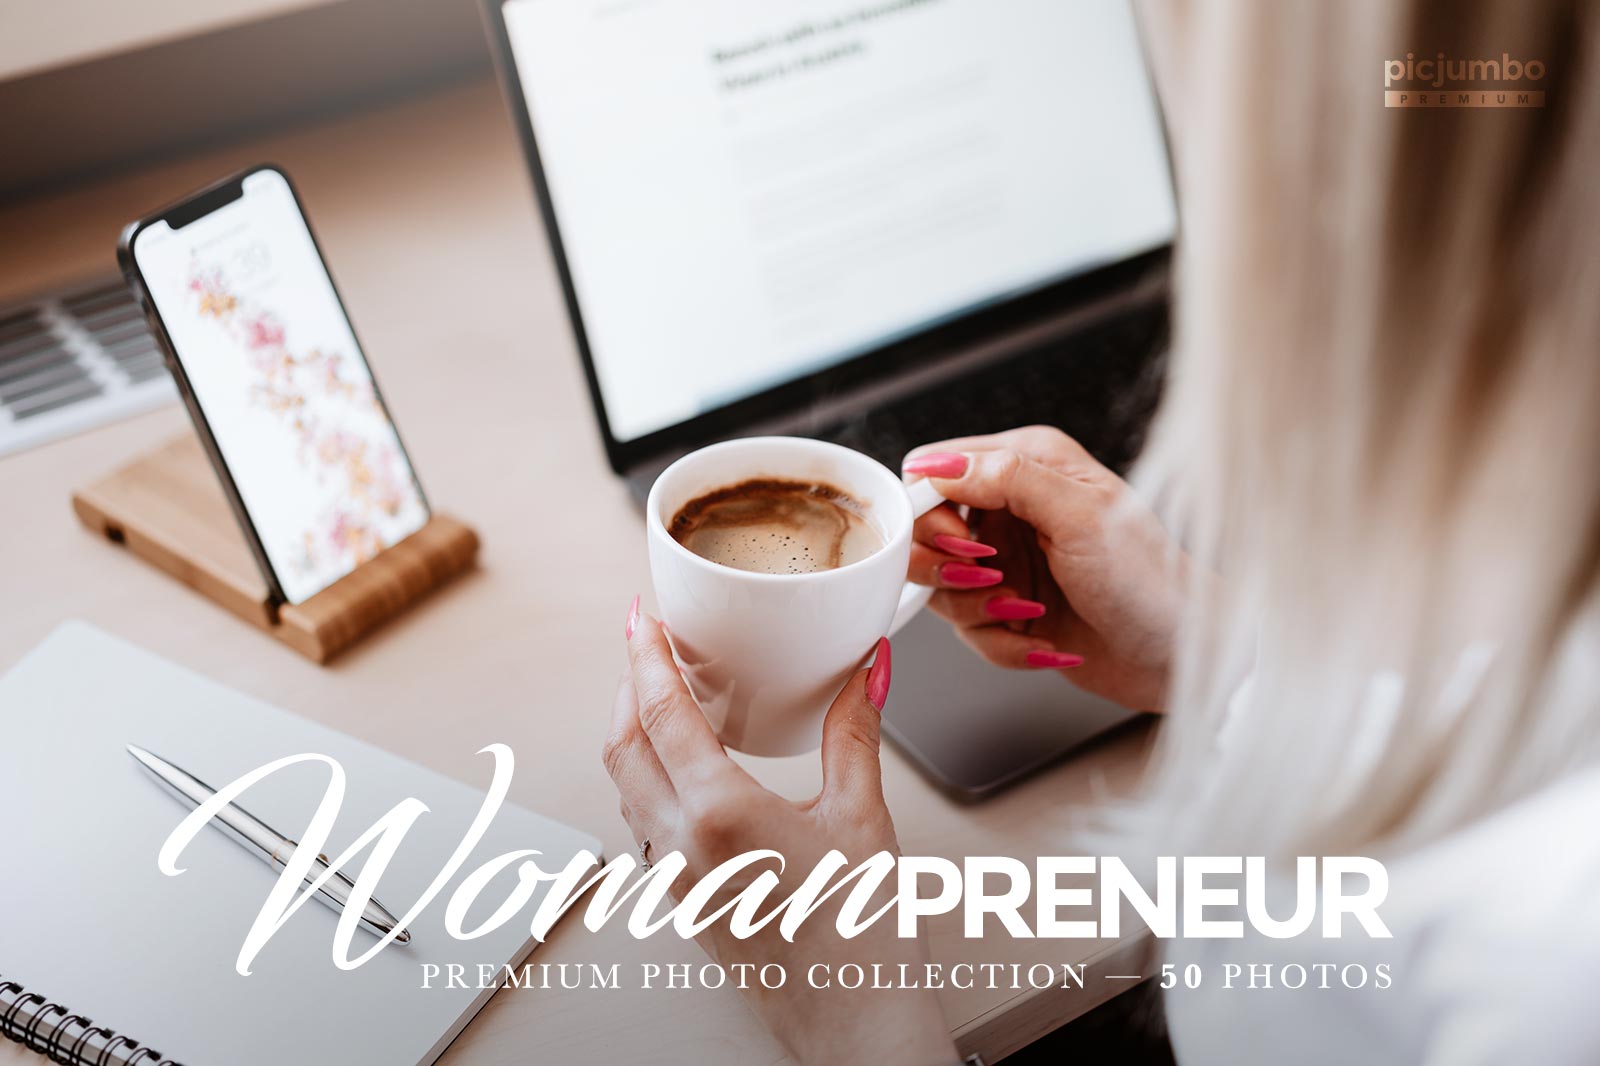 Womanpreneur Stock Photo Collection